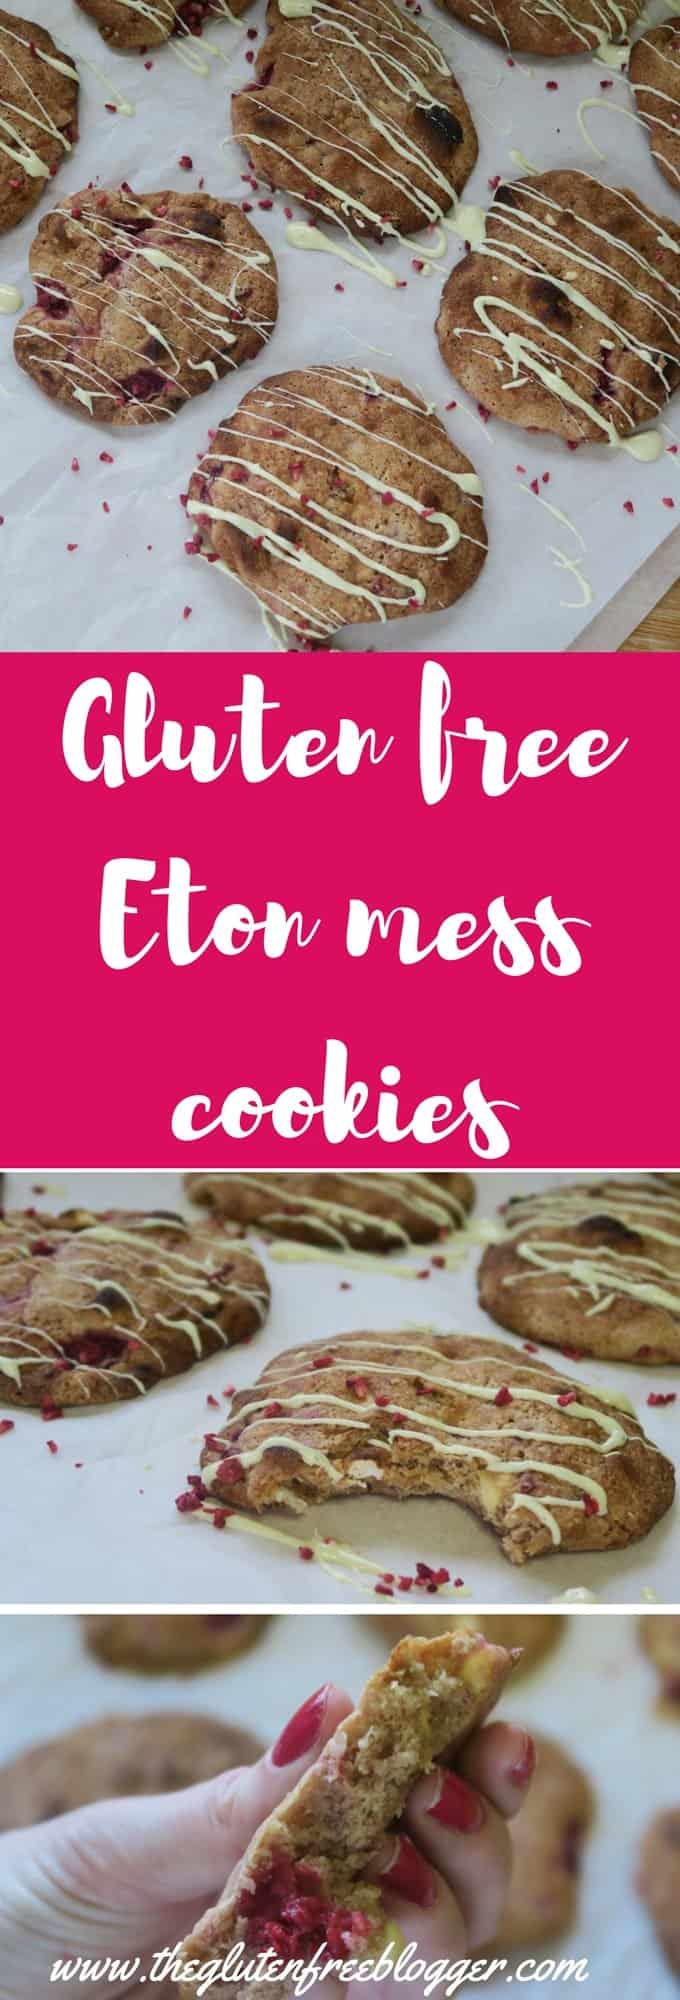 Gluten free Eton mess cookies recipe - chewy cookies recipe - www.theglutenfreeblogger.com